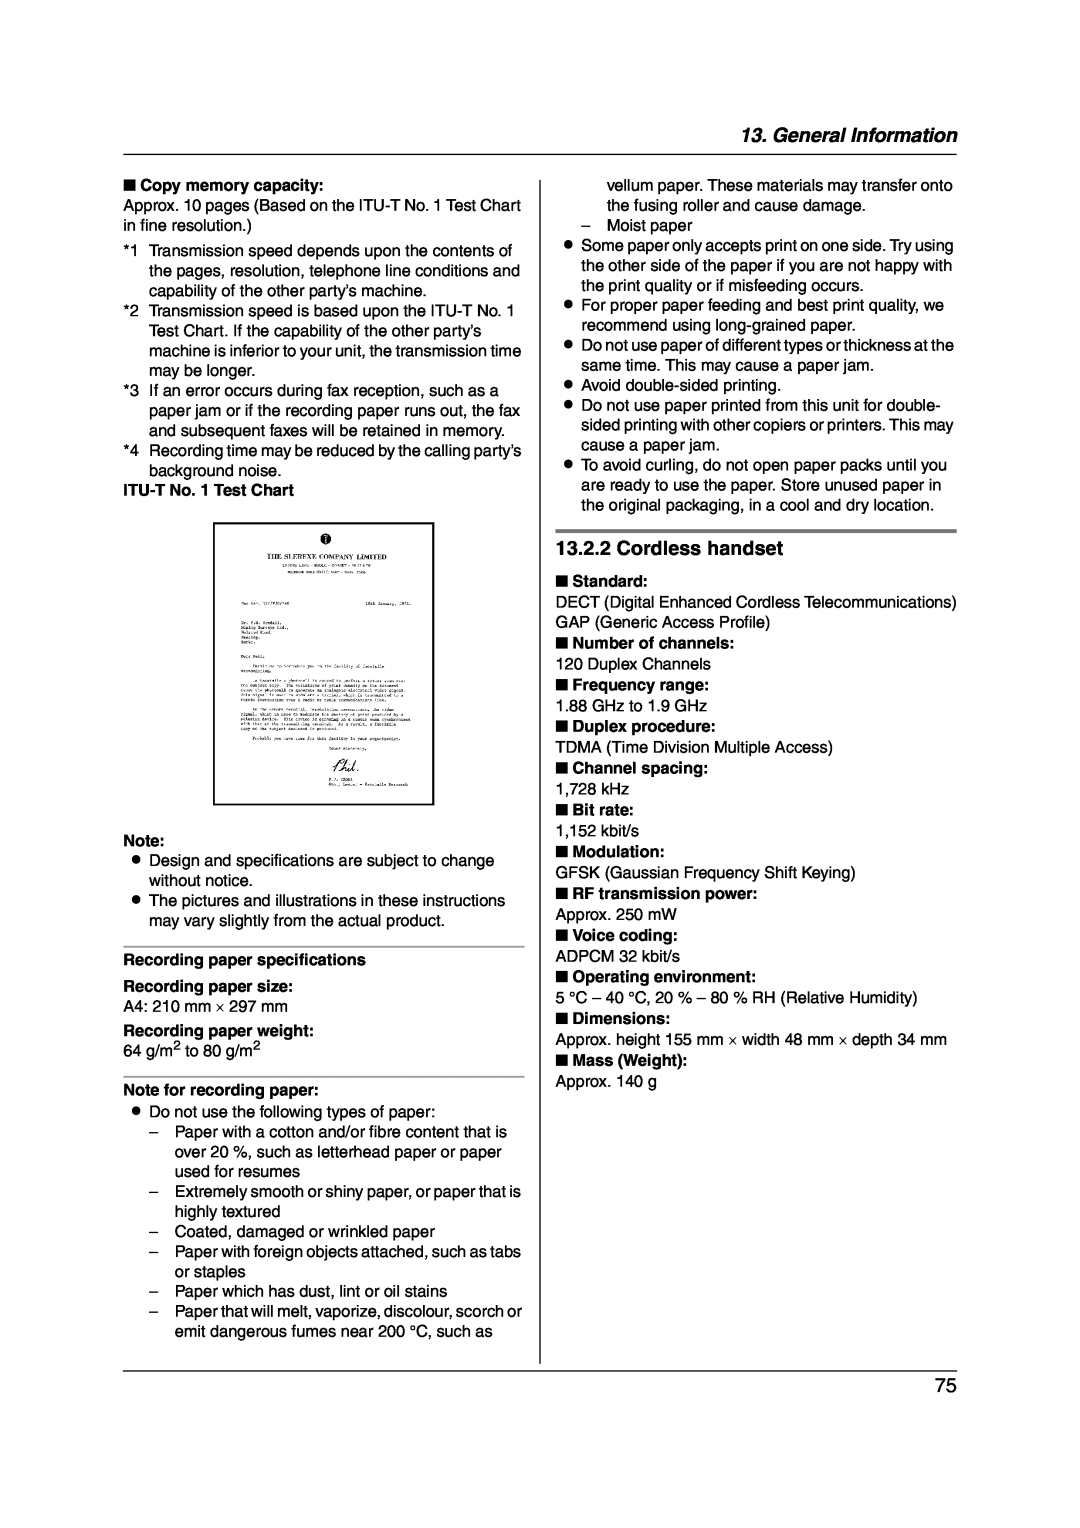 Panasonic KX-FC228HK operating instructions Cordless handset, General Information 